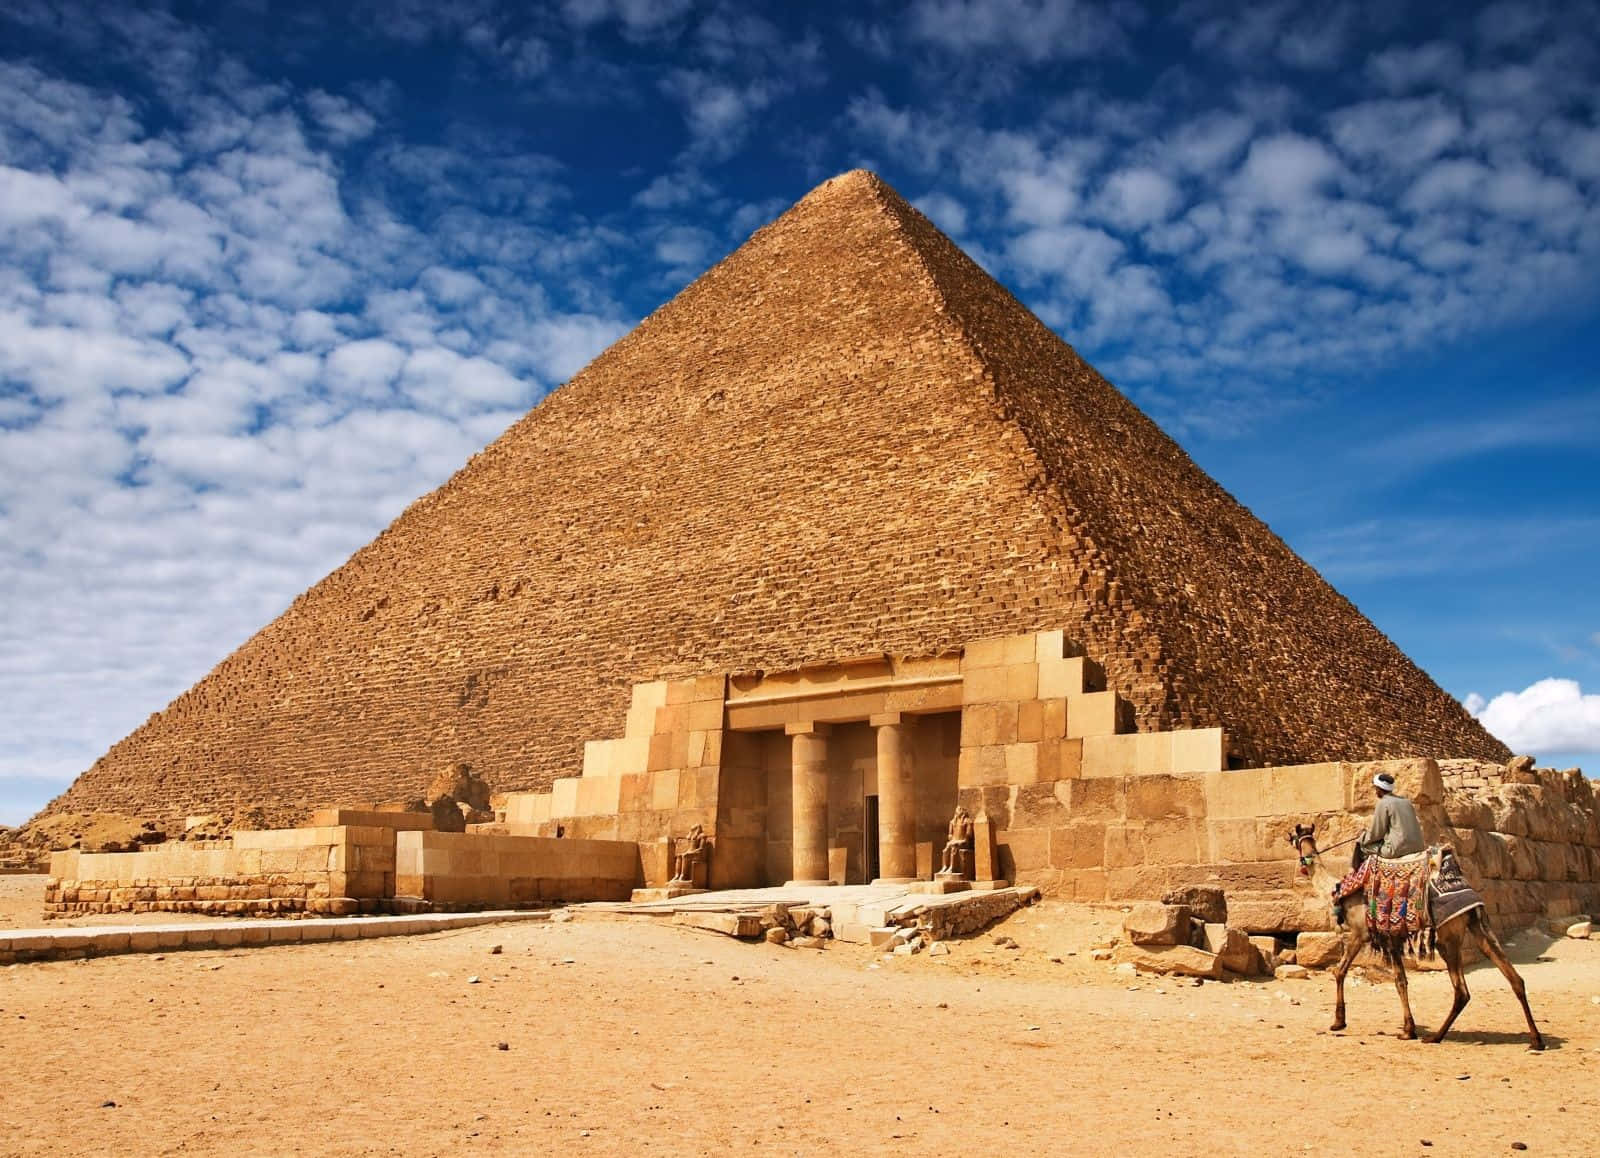 Caption: Majestic Pyramids of Giza under the dazzling skies